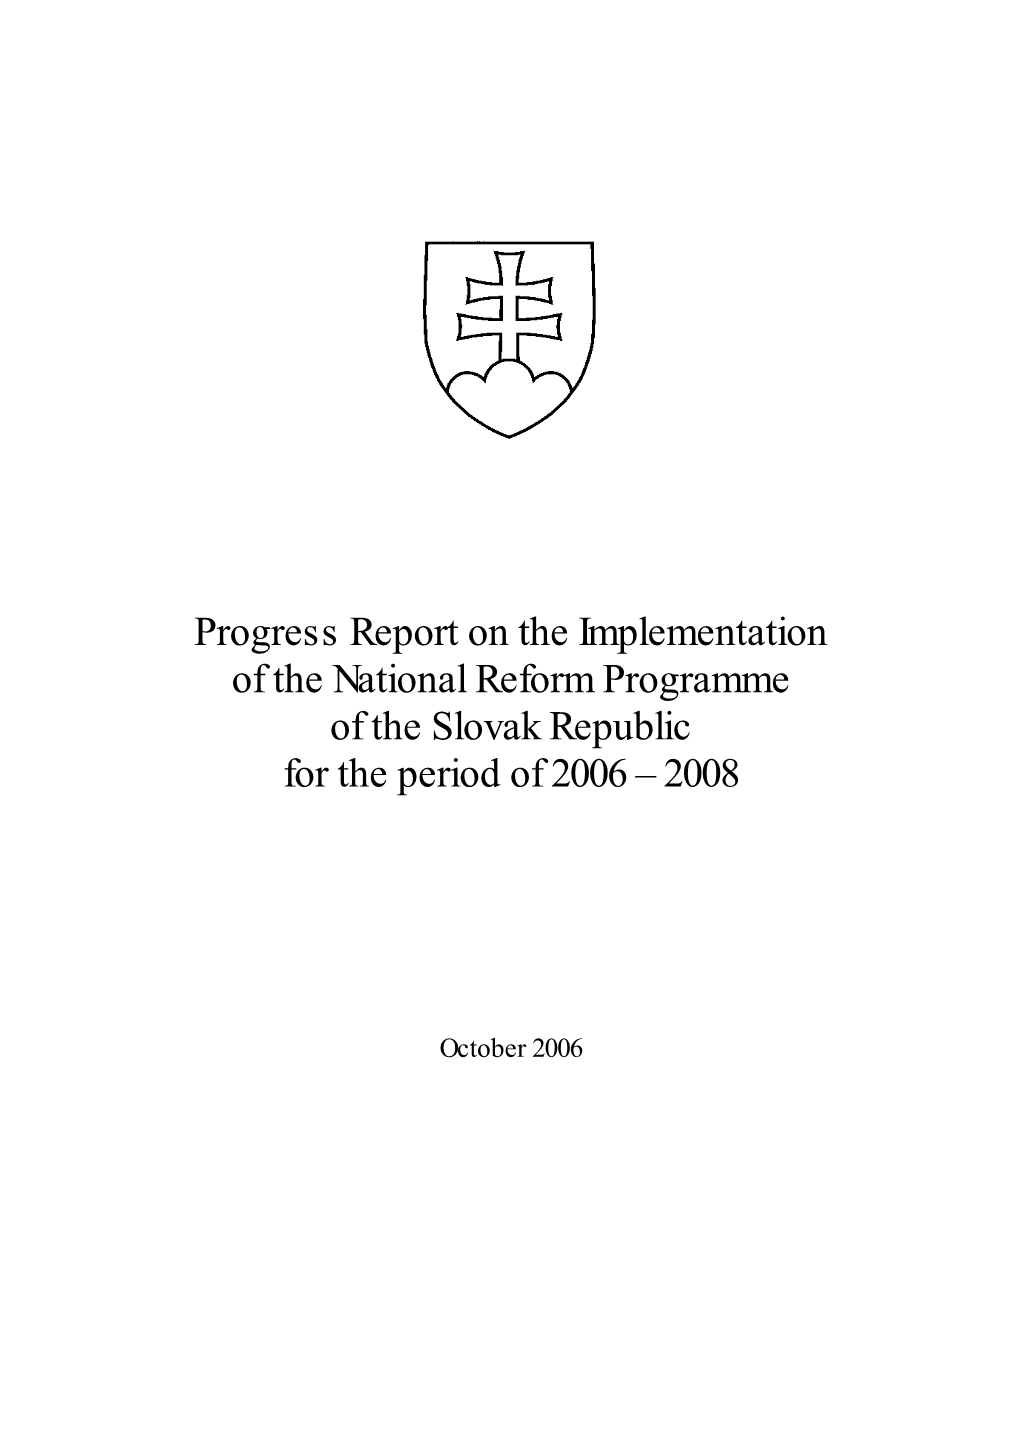 Progress Report 2006